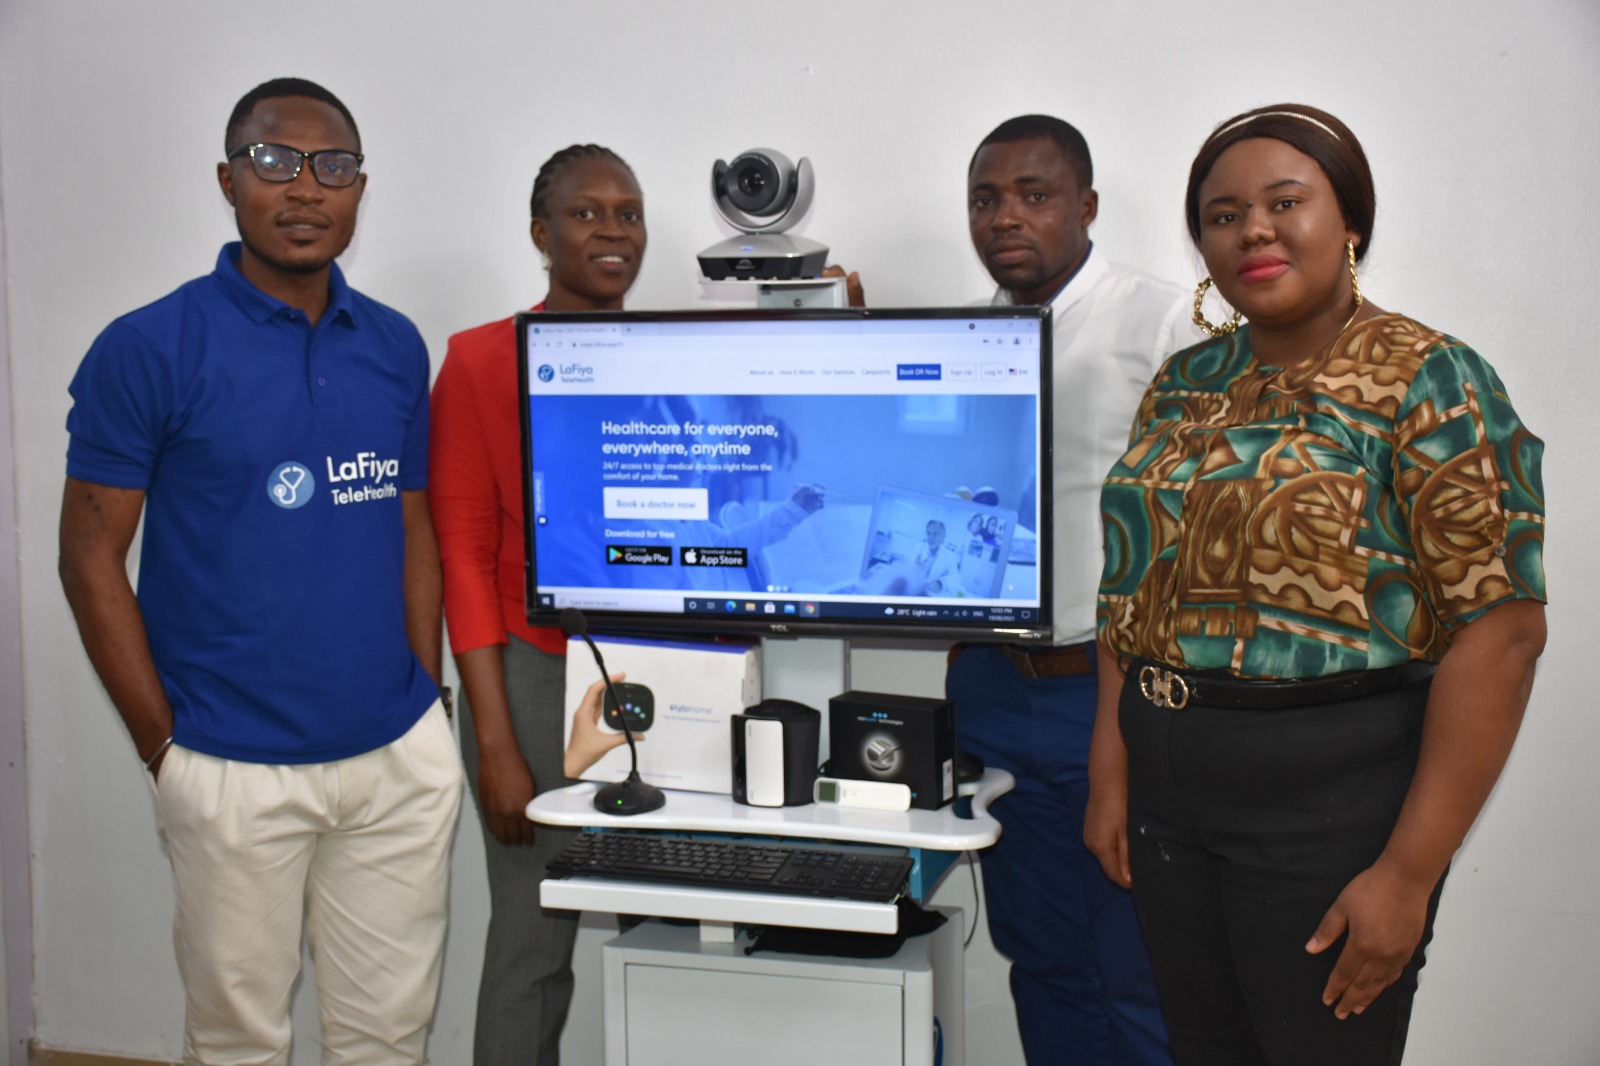 COVID-19: Laifiya Telehealth Launches Innovative Equipment For Virtual Health Treatment, Care